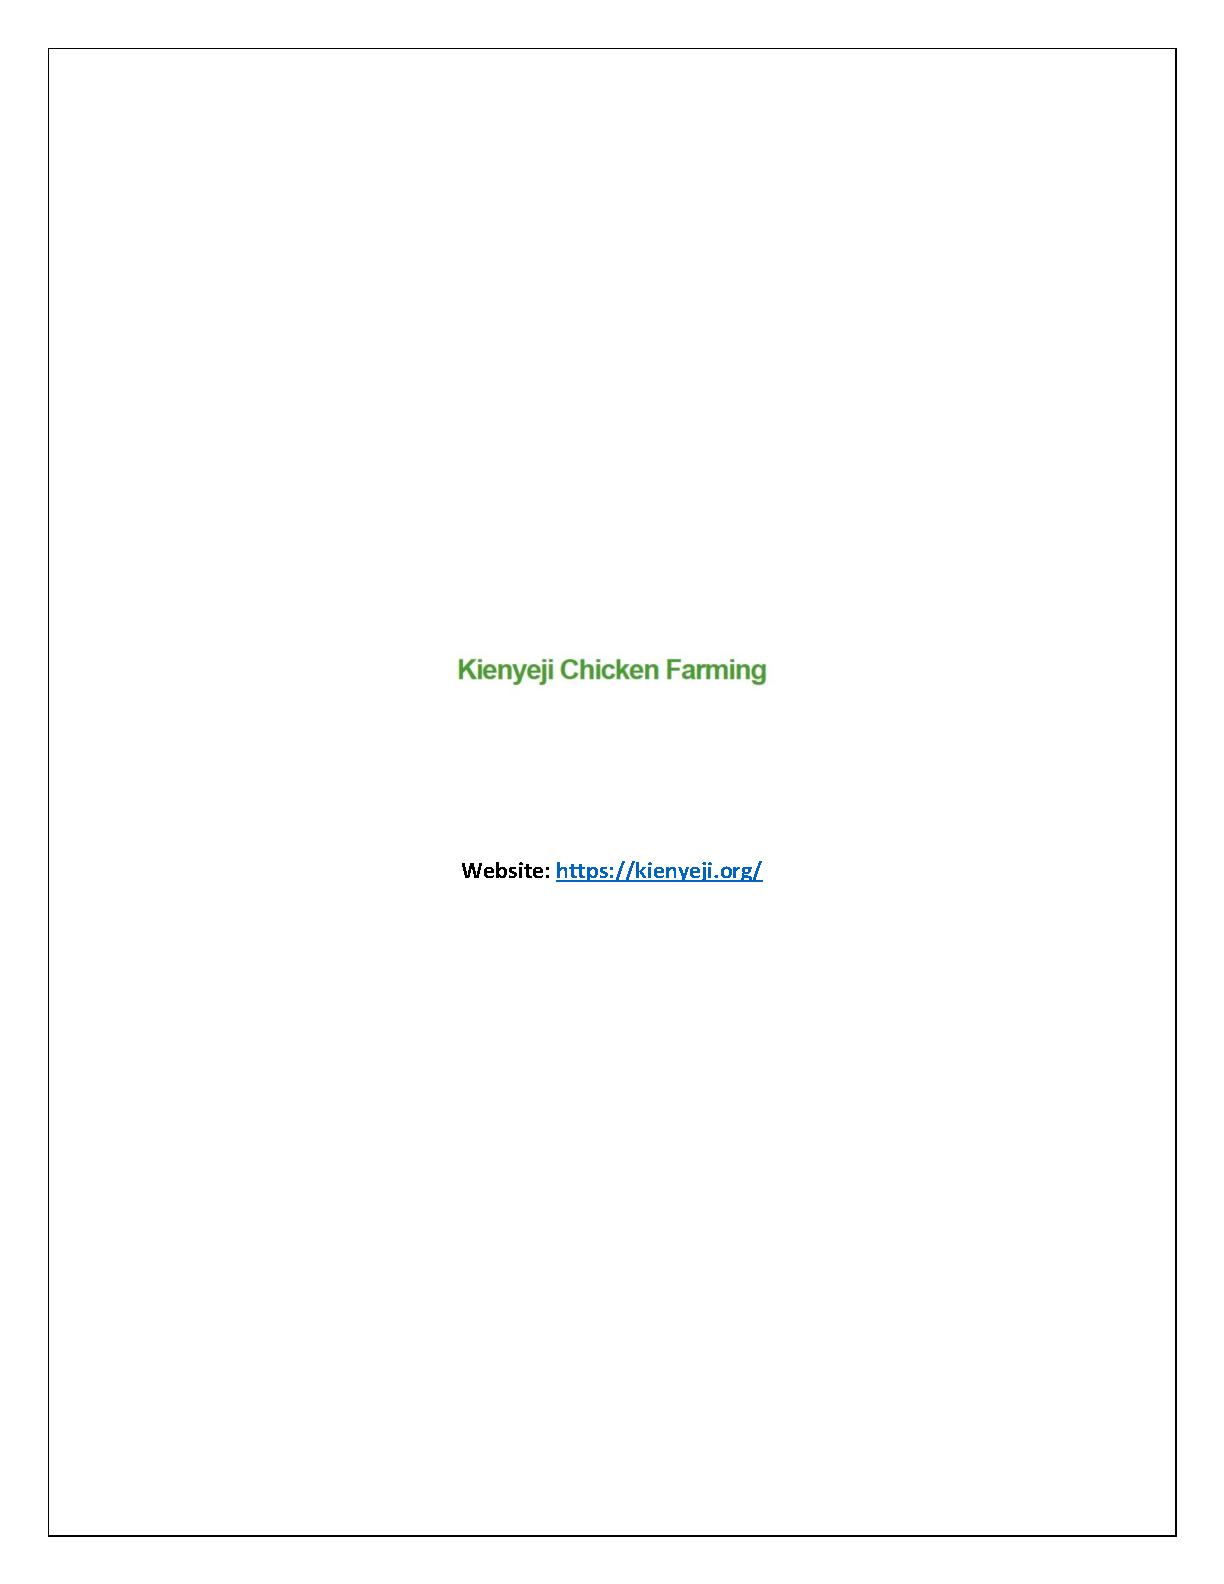 kienyeji chicken business plan pdf free download